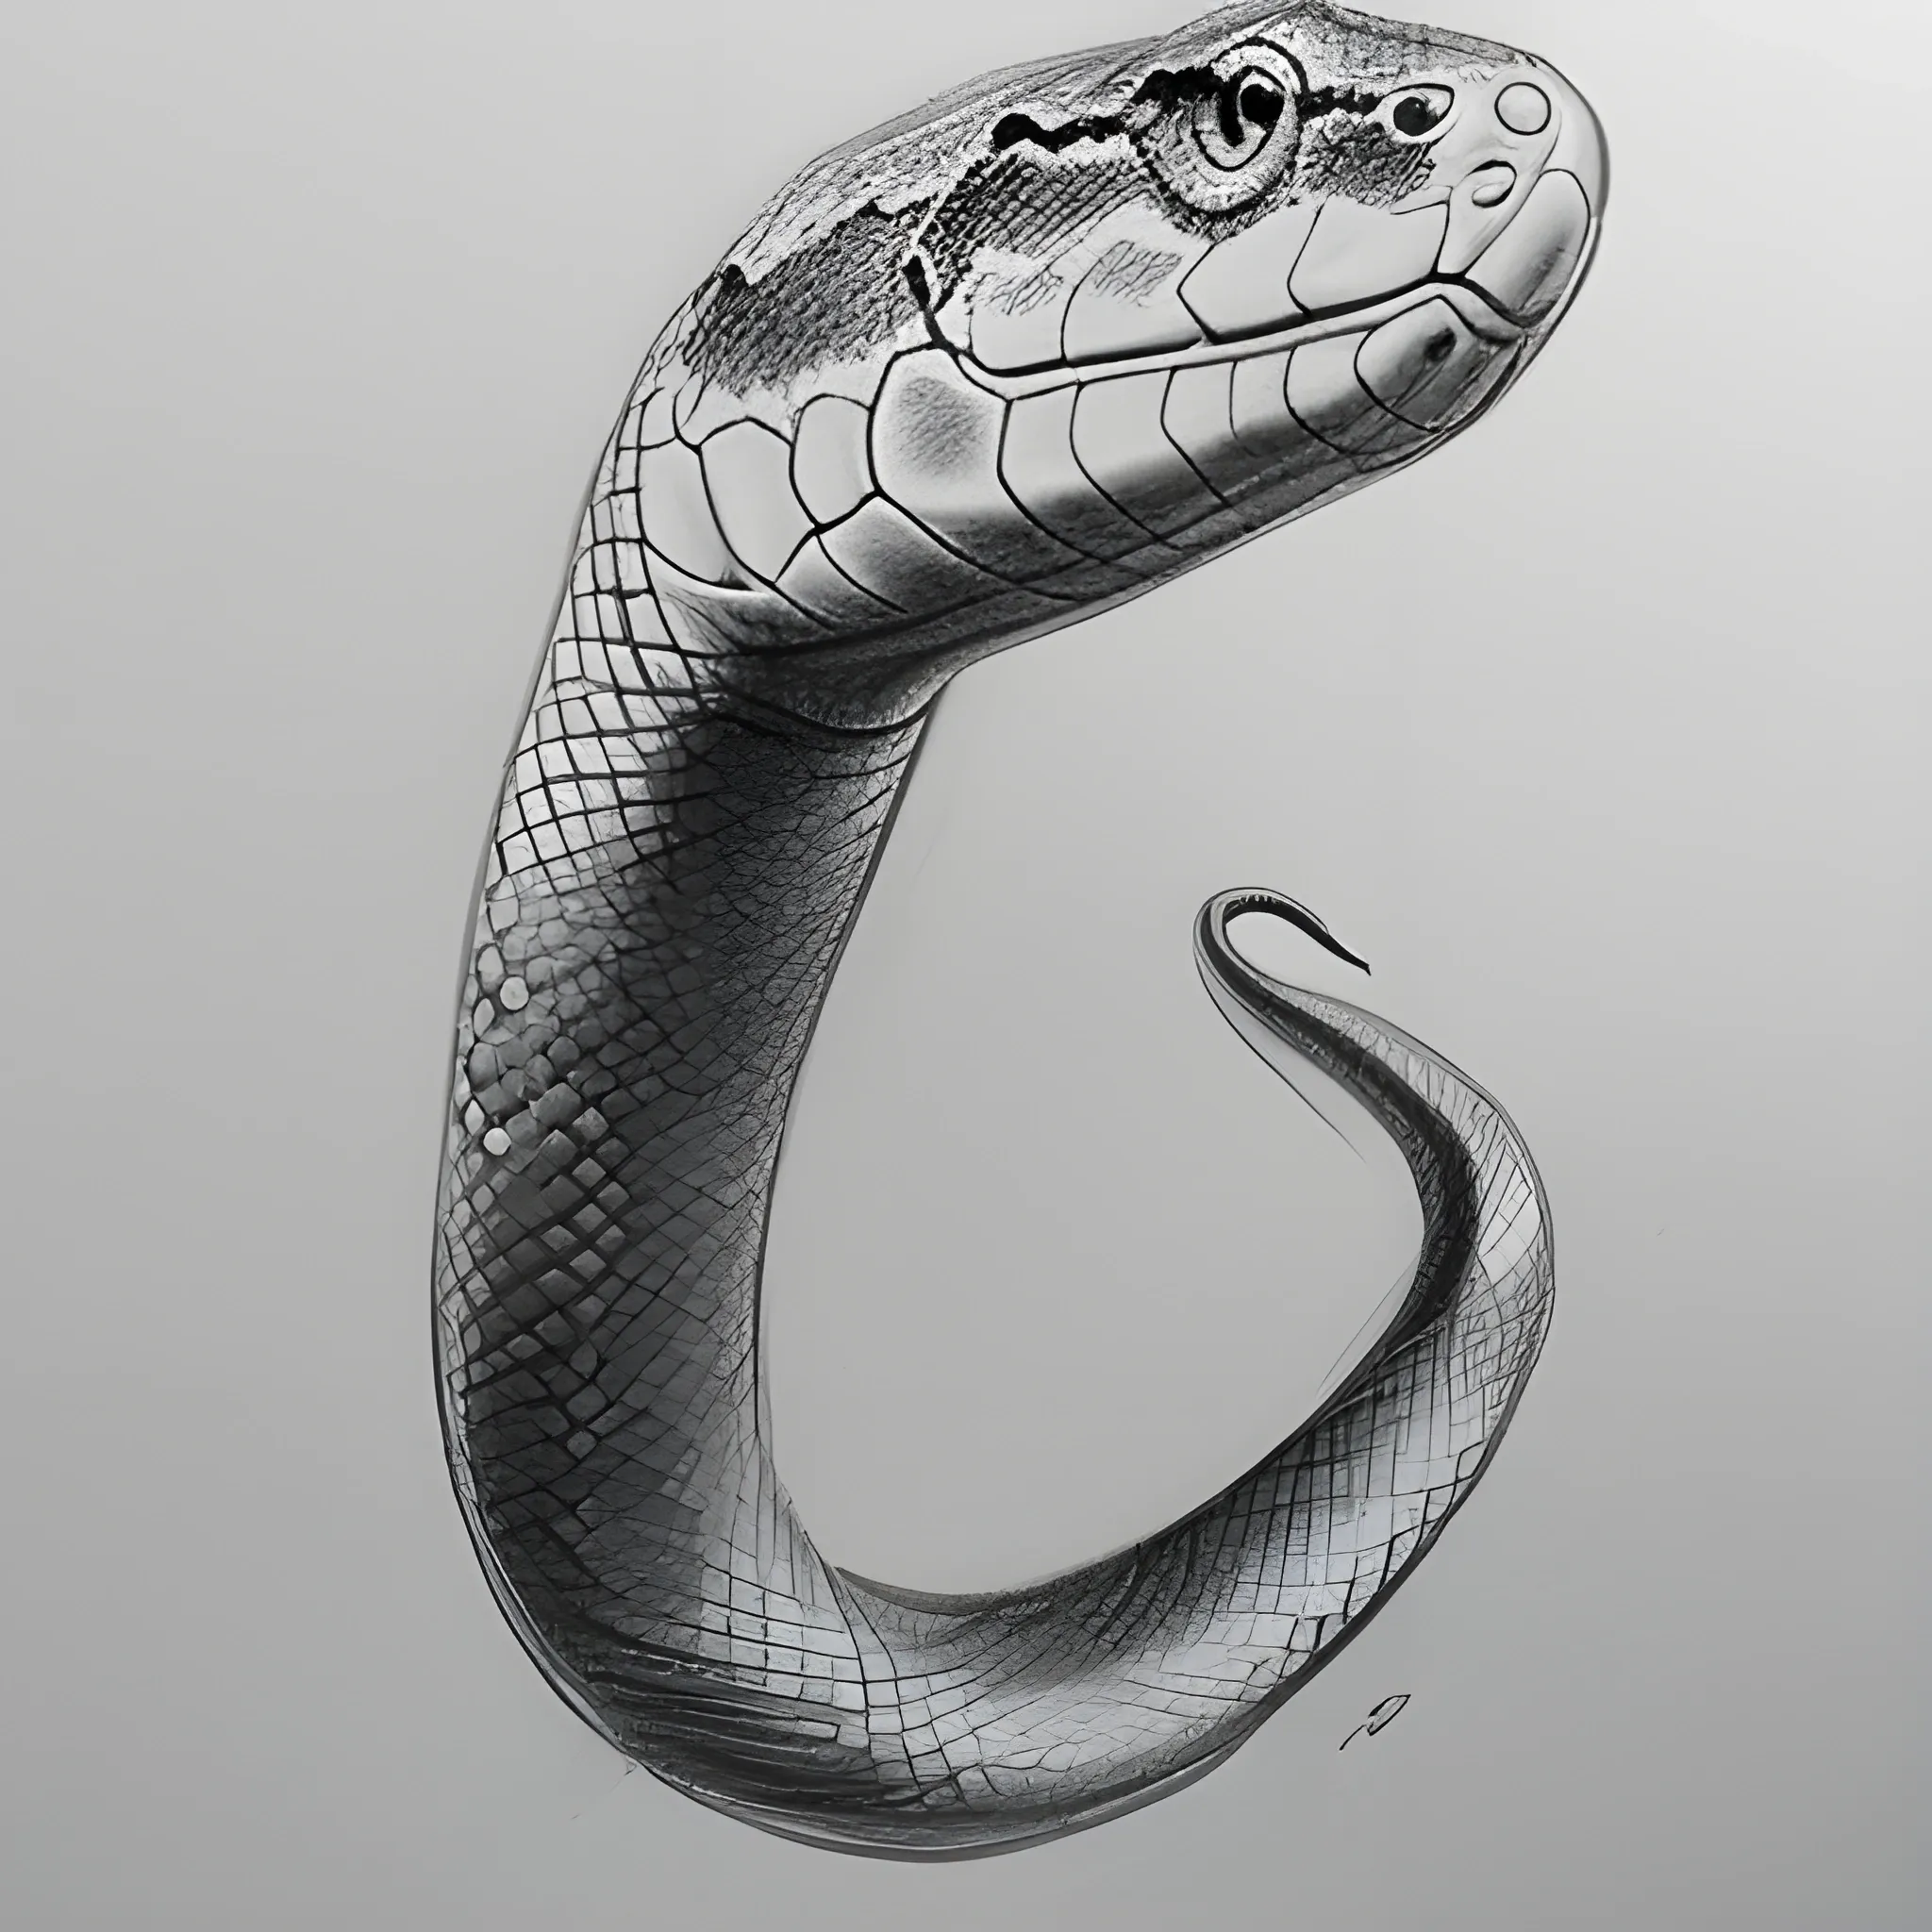 Snake drawing - Chess.com